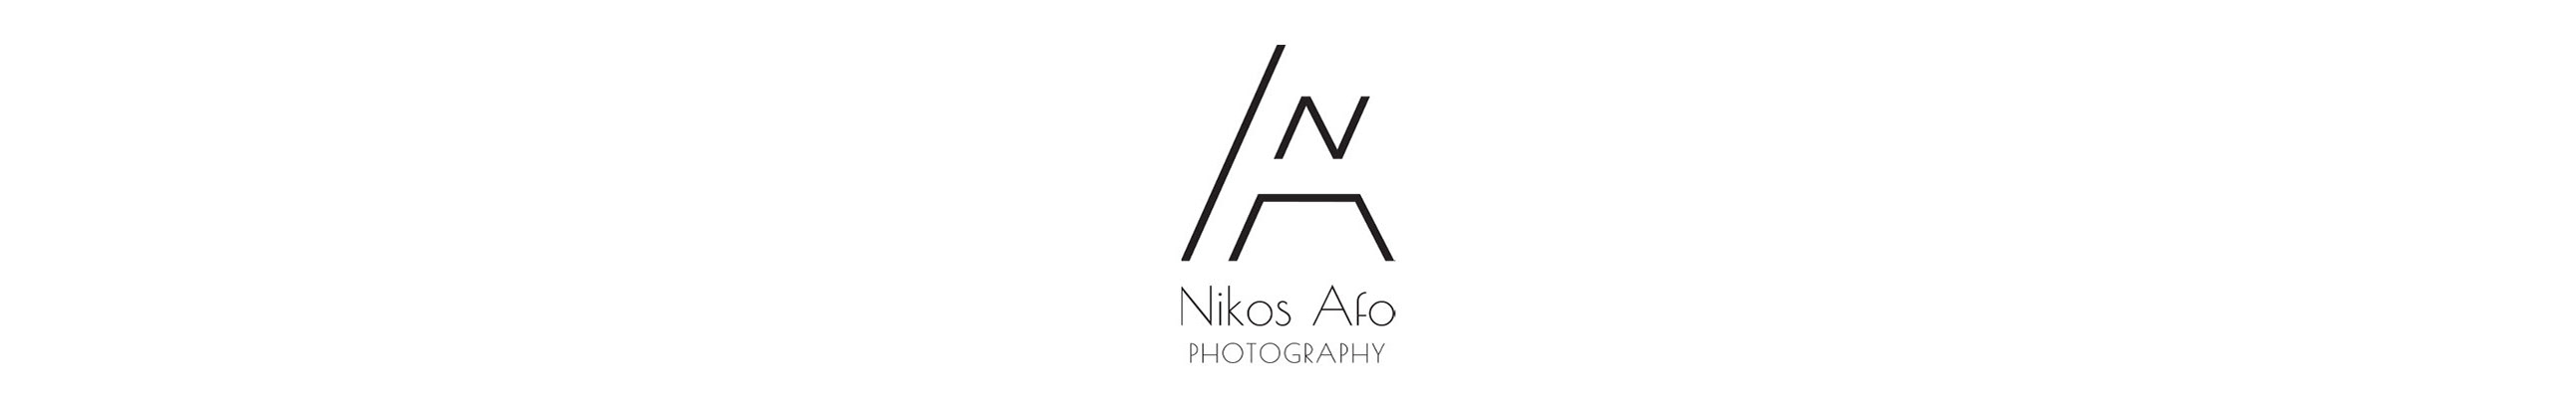 Nikos Afo's profile banner